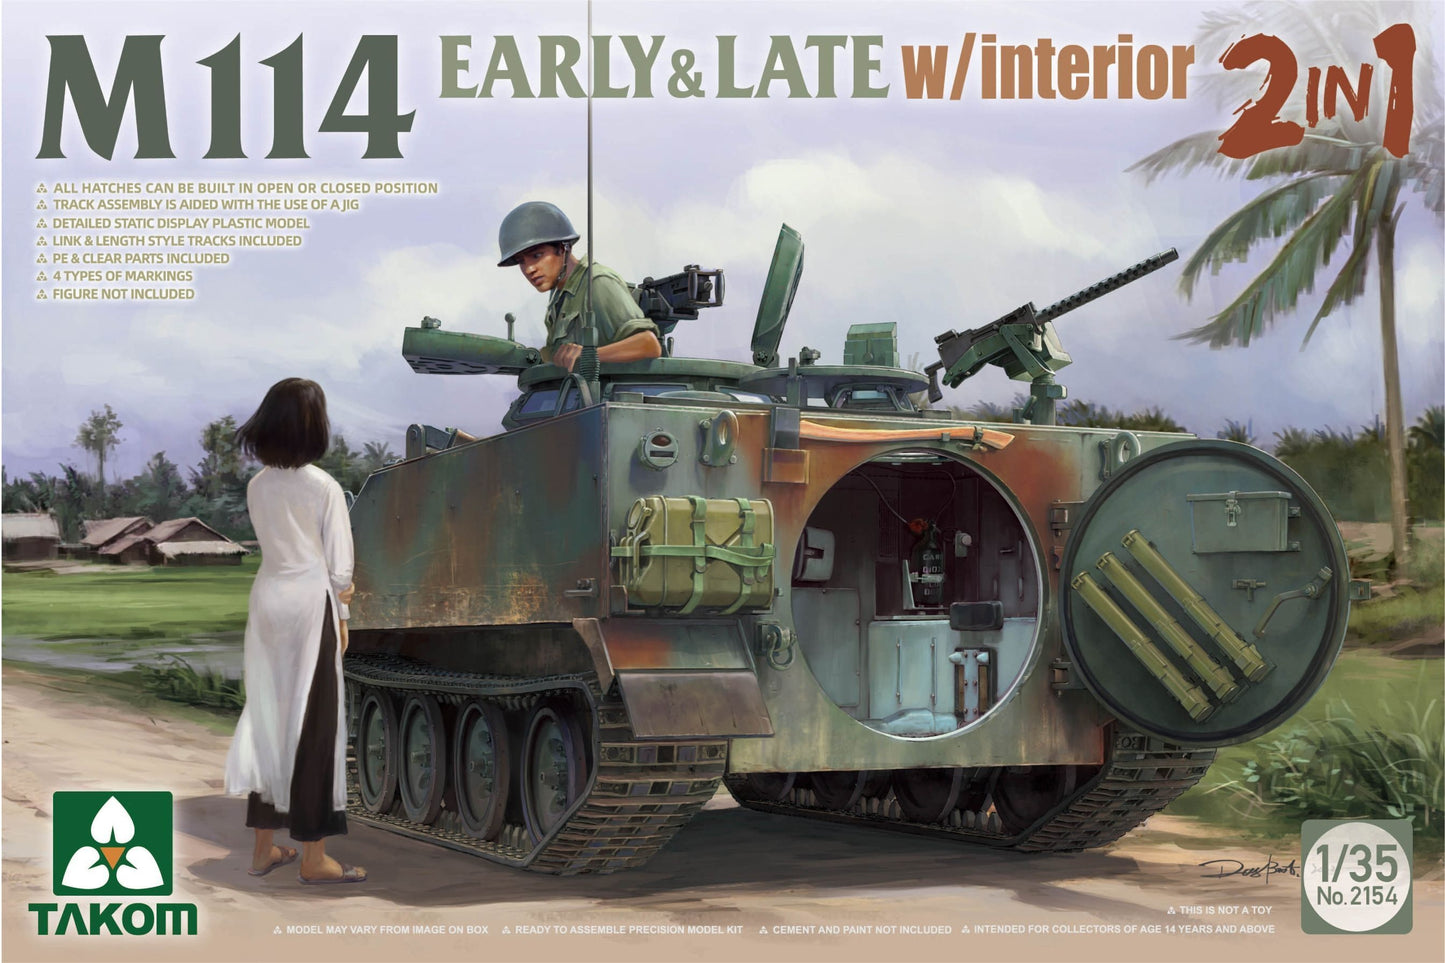 Takom 1/35 M114 EARLY & LATE w/interior 2 in 1 Plastic Model Kit